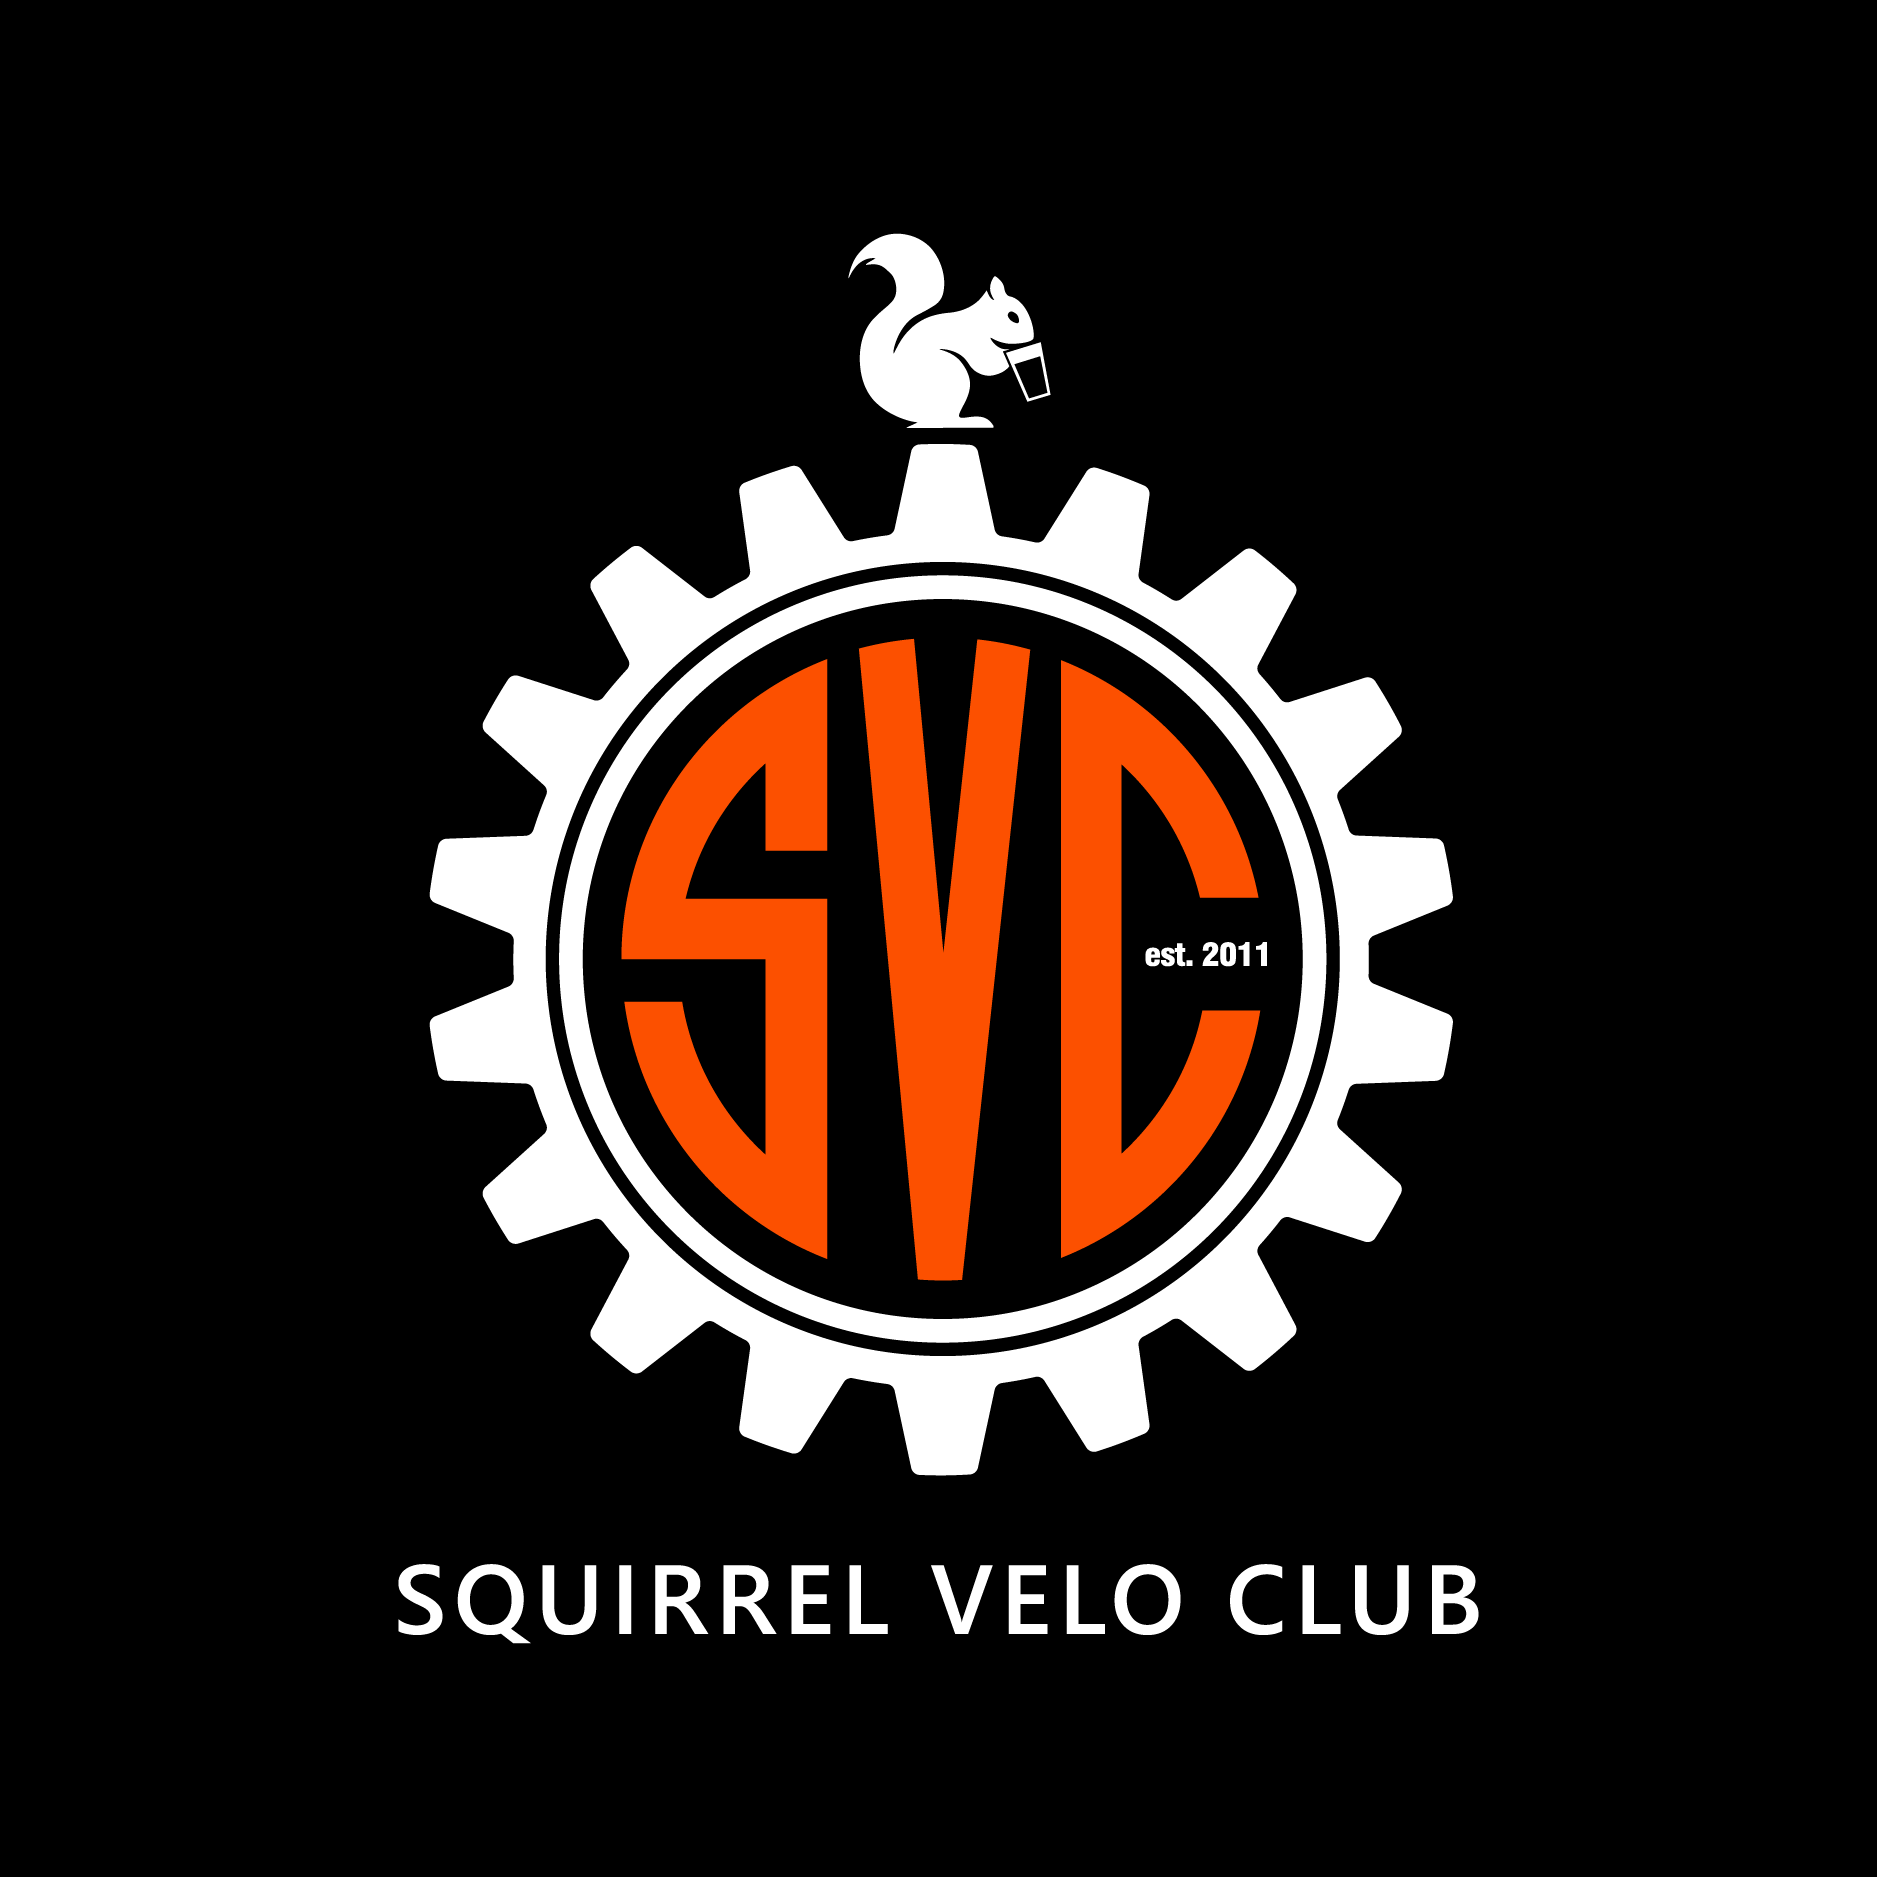 Club Image for SQUIRREL VELO CLUB